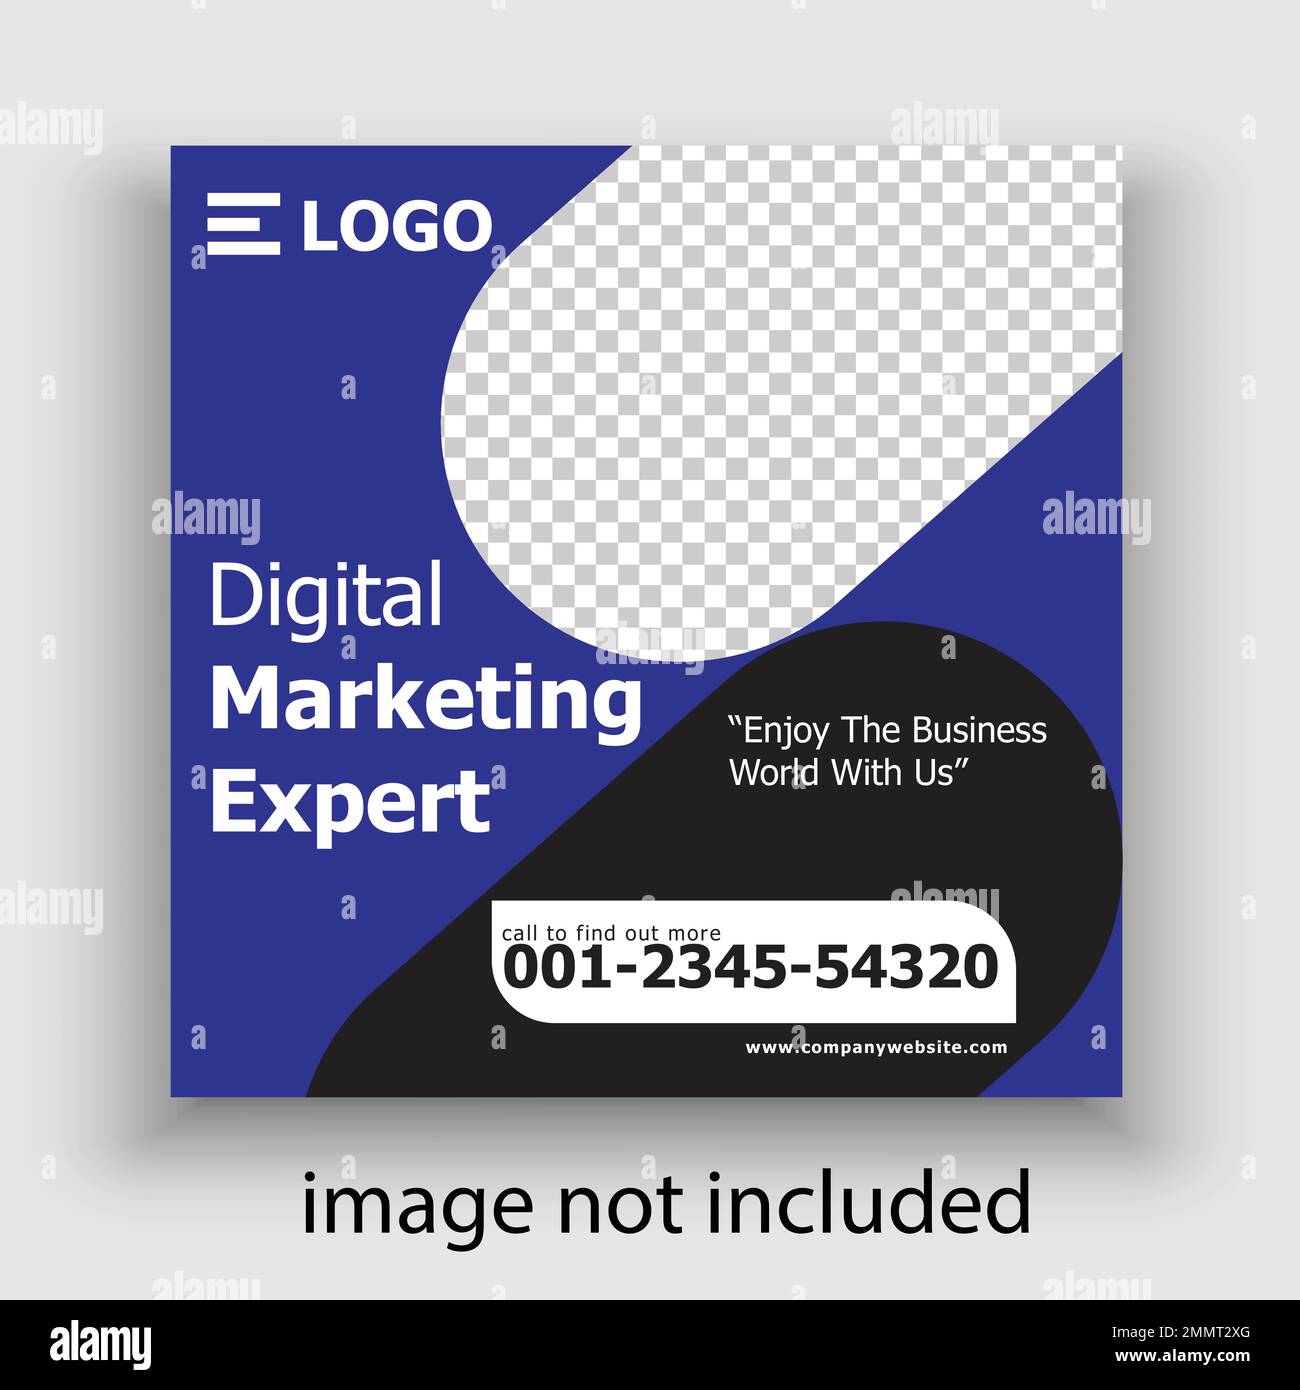 Social Media Post Design Template For Restaurant Business. promotion banner. ready use vector design template. Stock Vector